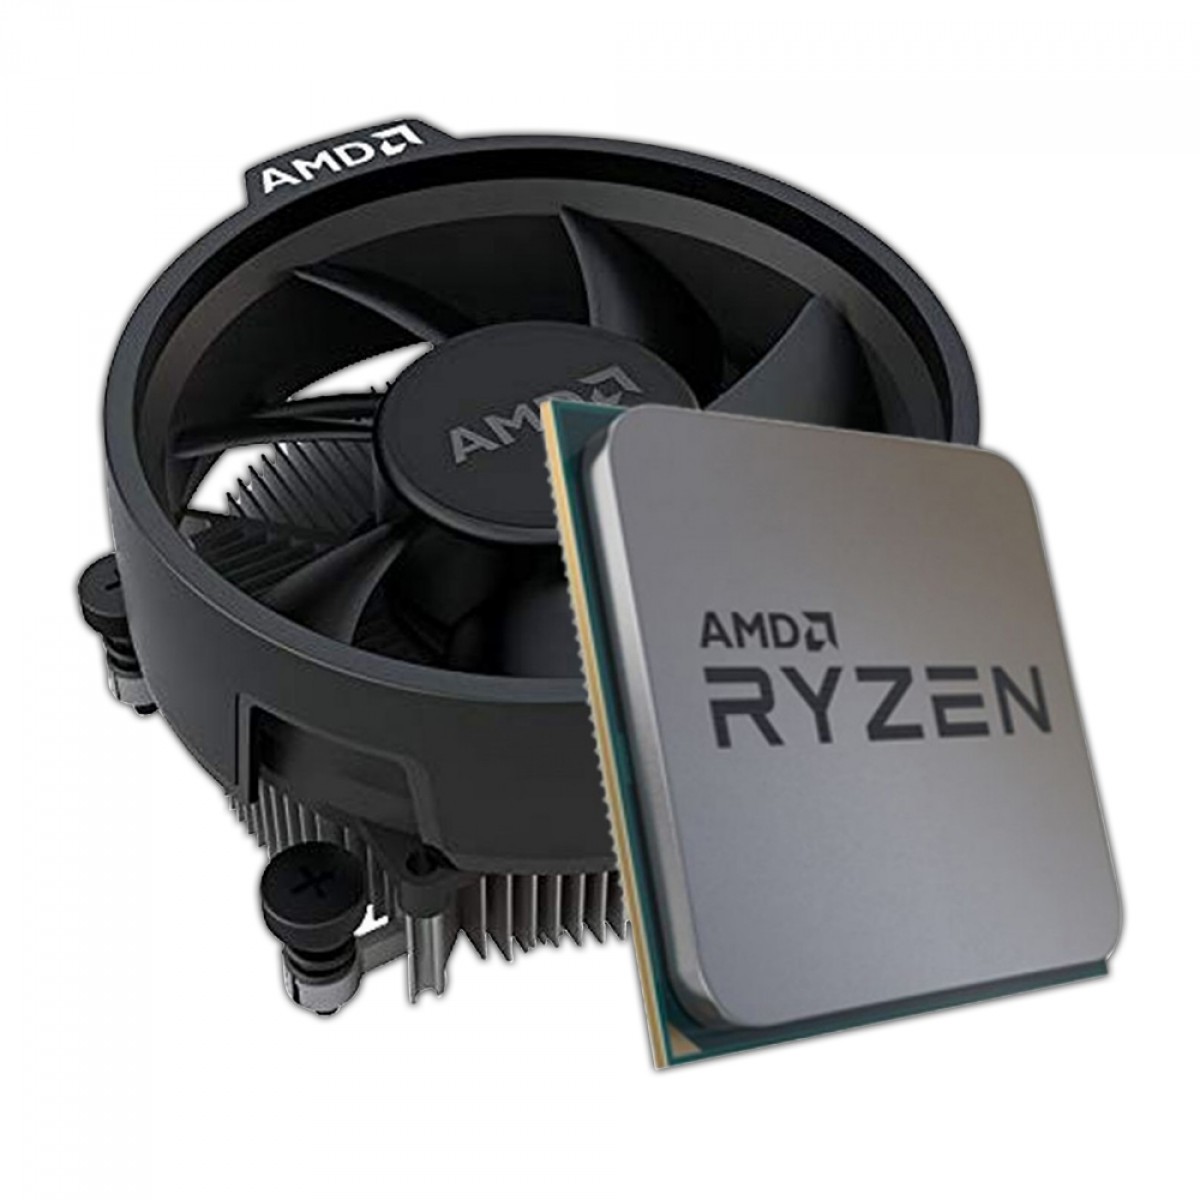 Kit Upgrade Placa Mãe ASRock B450M Steel Legend + Processador AMD Ryzen 5 3400G 3.7GHz + Memória DDR4 8GB 3000MHz